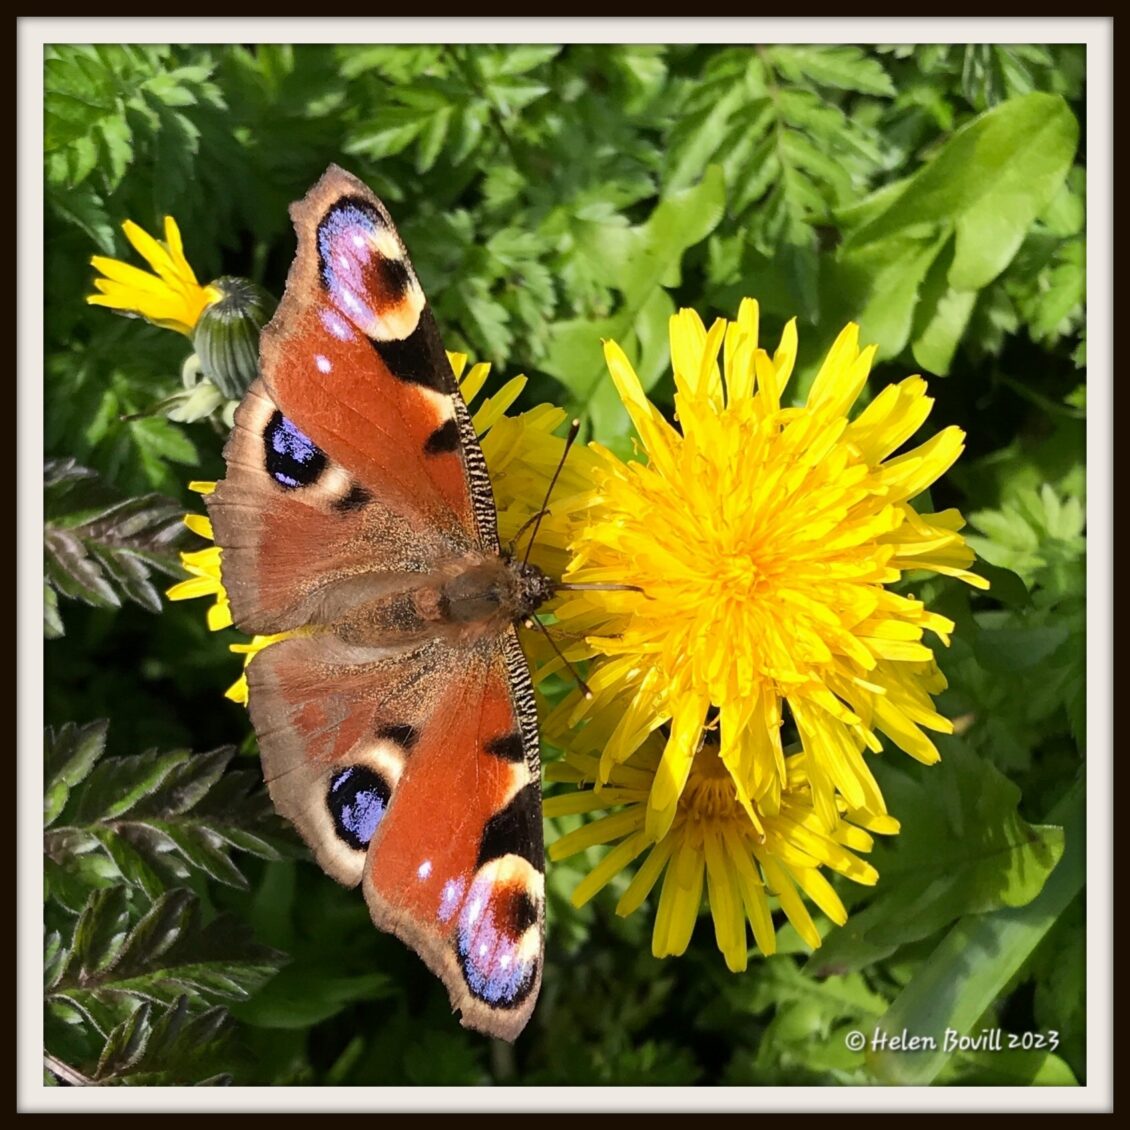 A Peacock Butterfly on a Dandelion